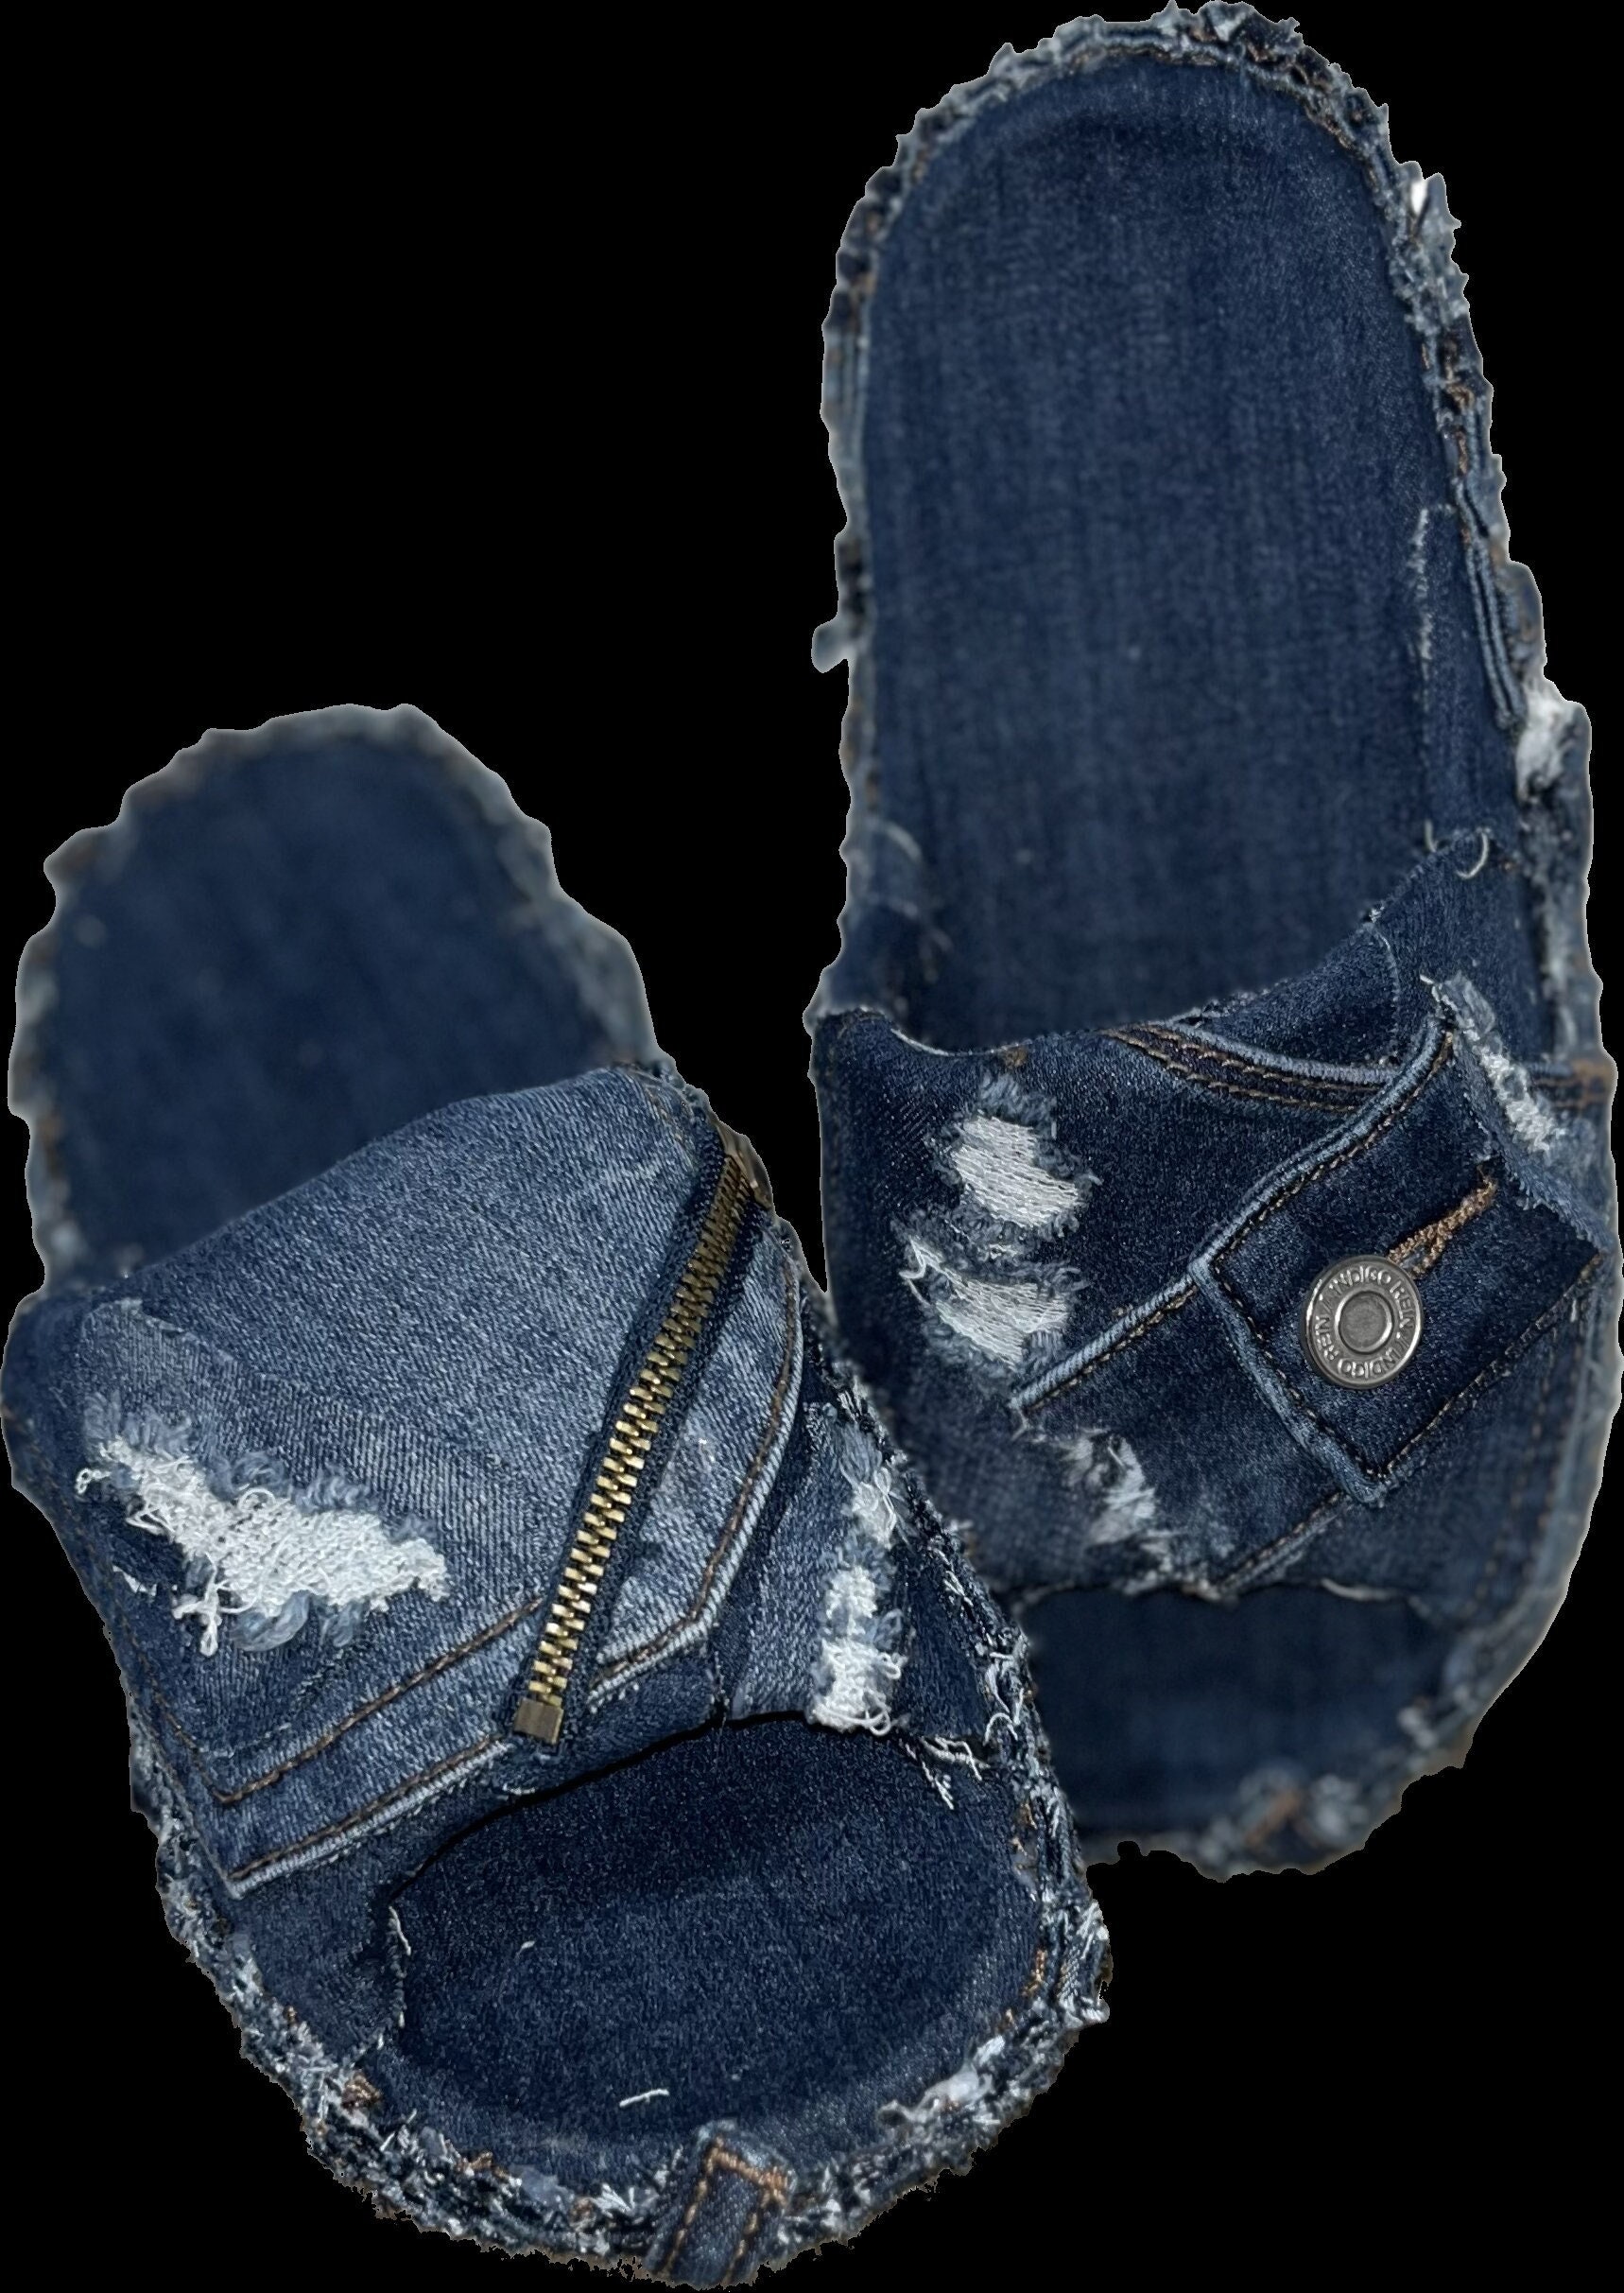 Soda Shoes Women Flip Flops Slippers Sandals Slides Peep Toe Blue Denim  EFRON-S | eBay